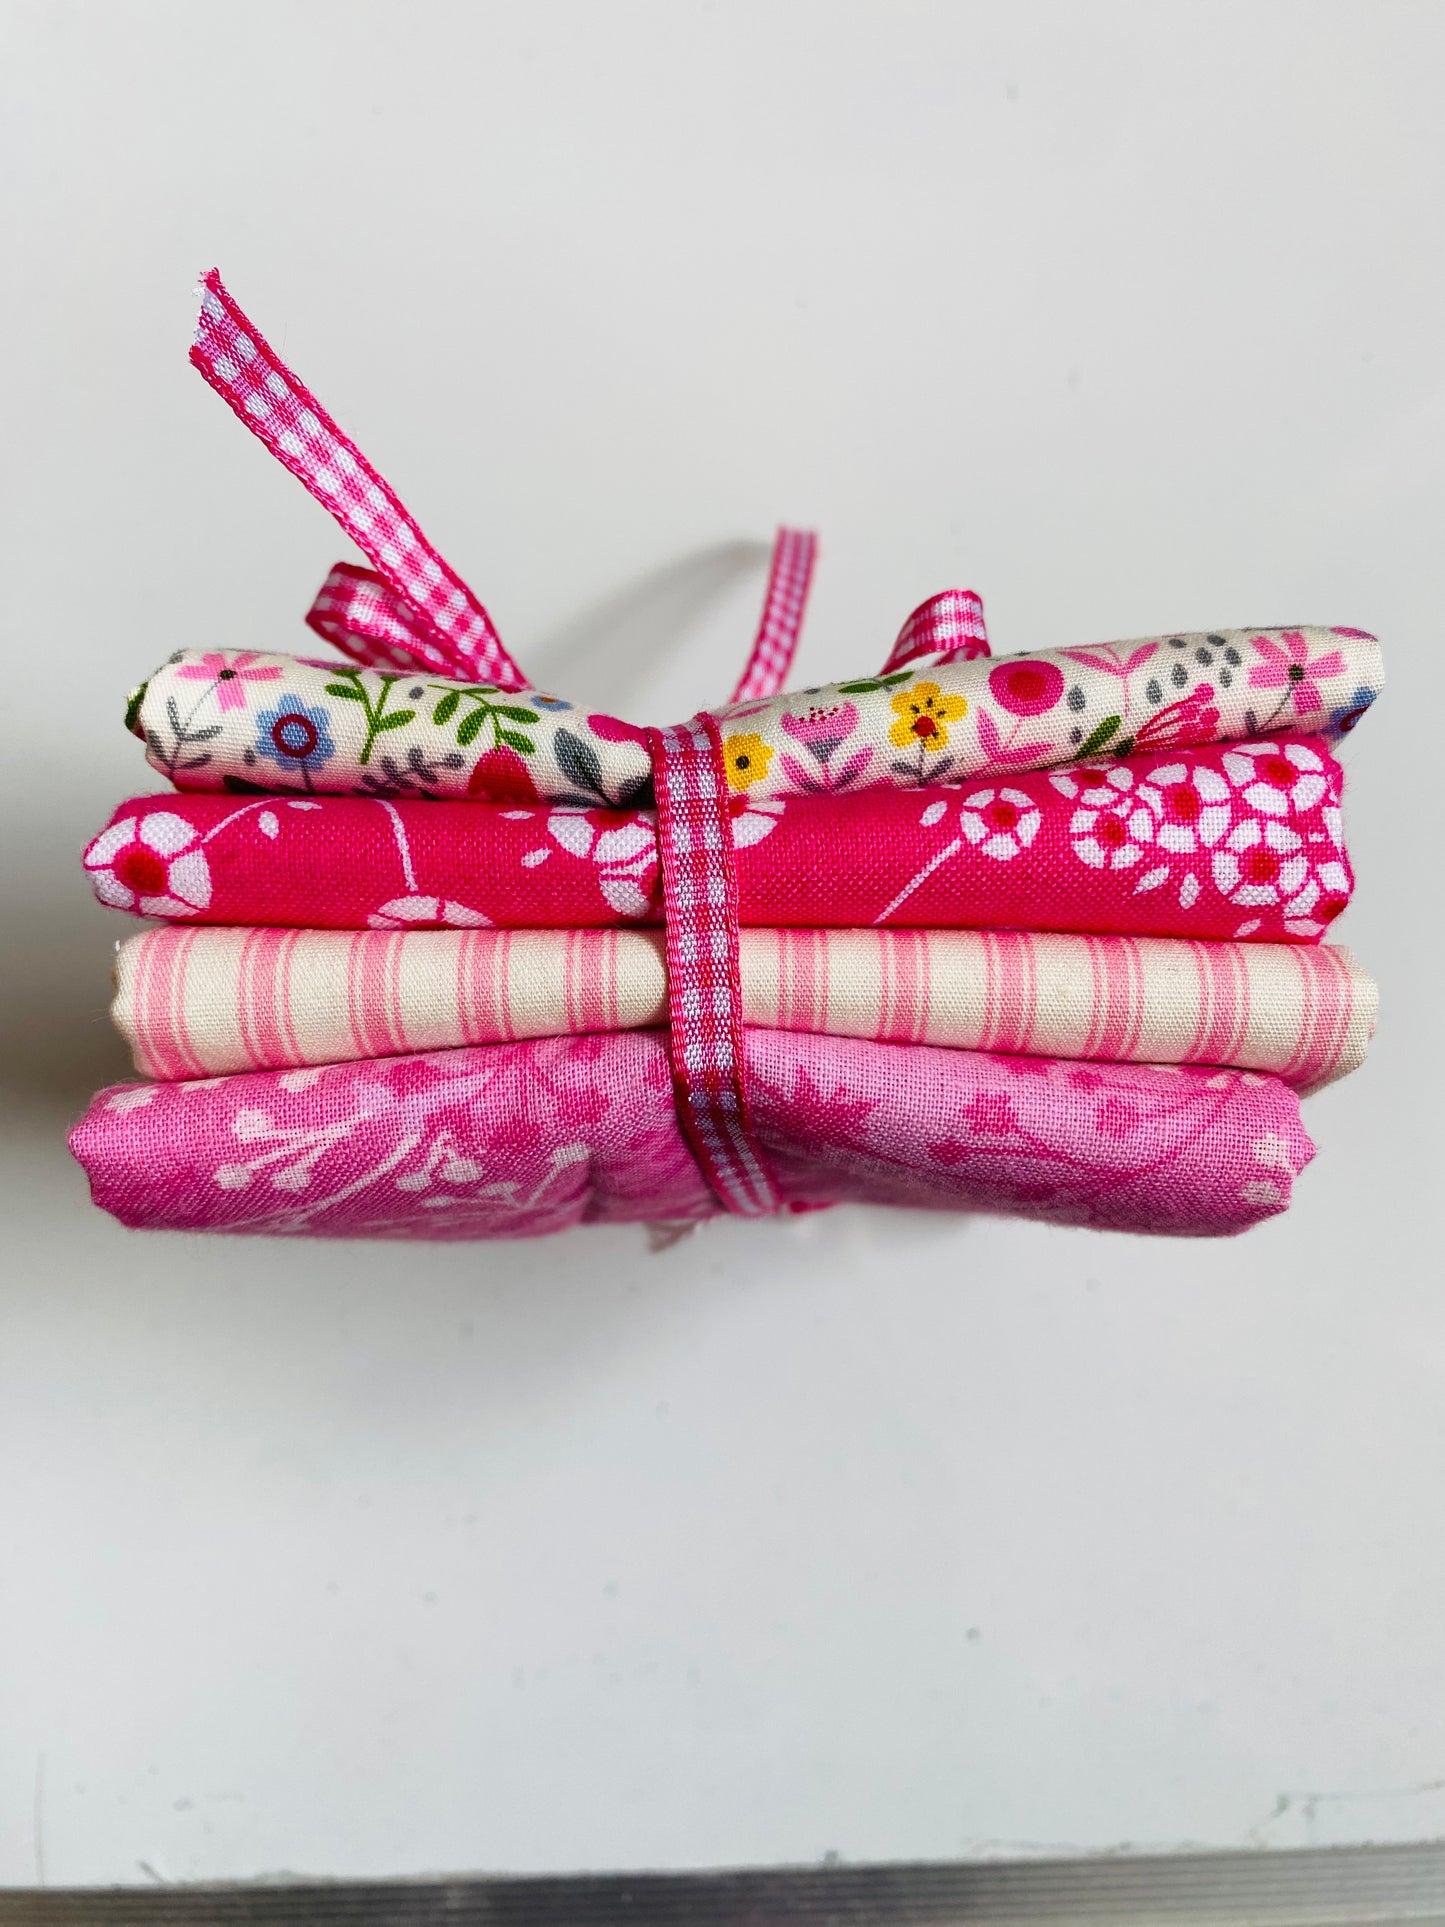 Fabric Fat Quarter Bundle - 'Lovely Summer Pinks' - 100% Cotton